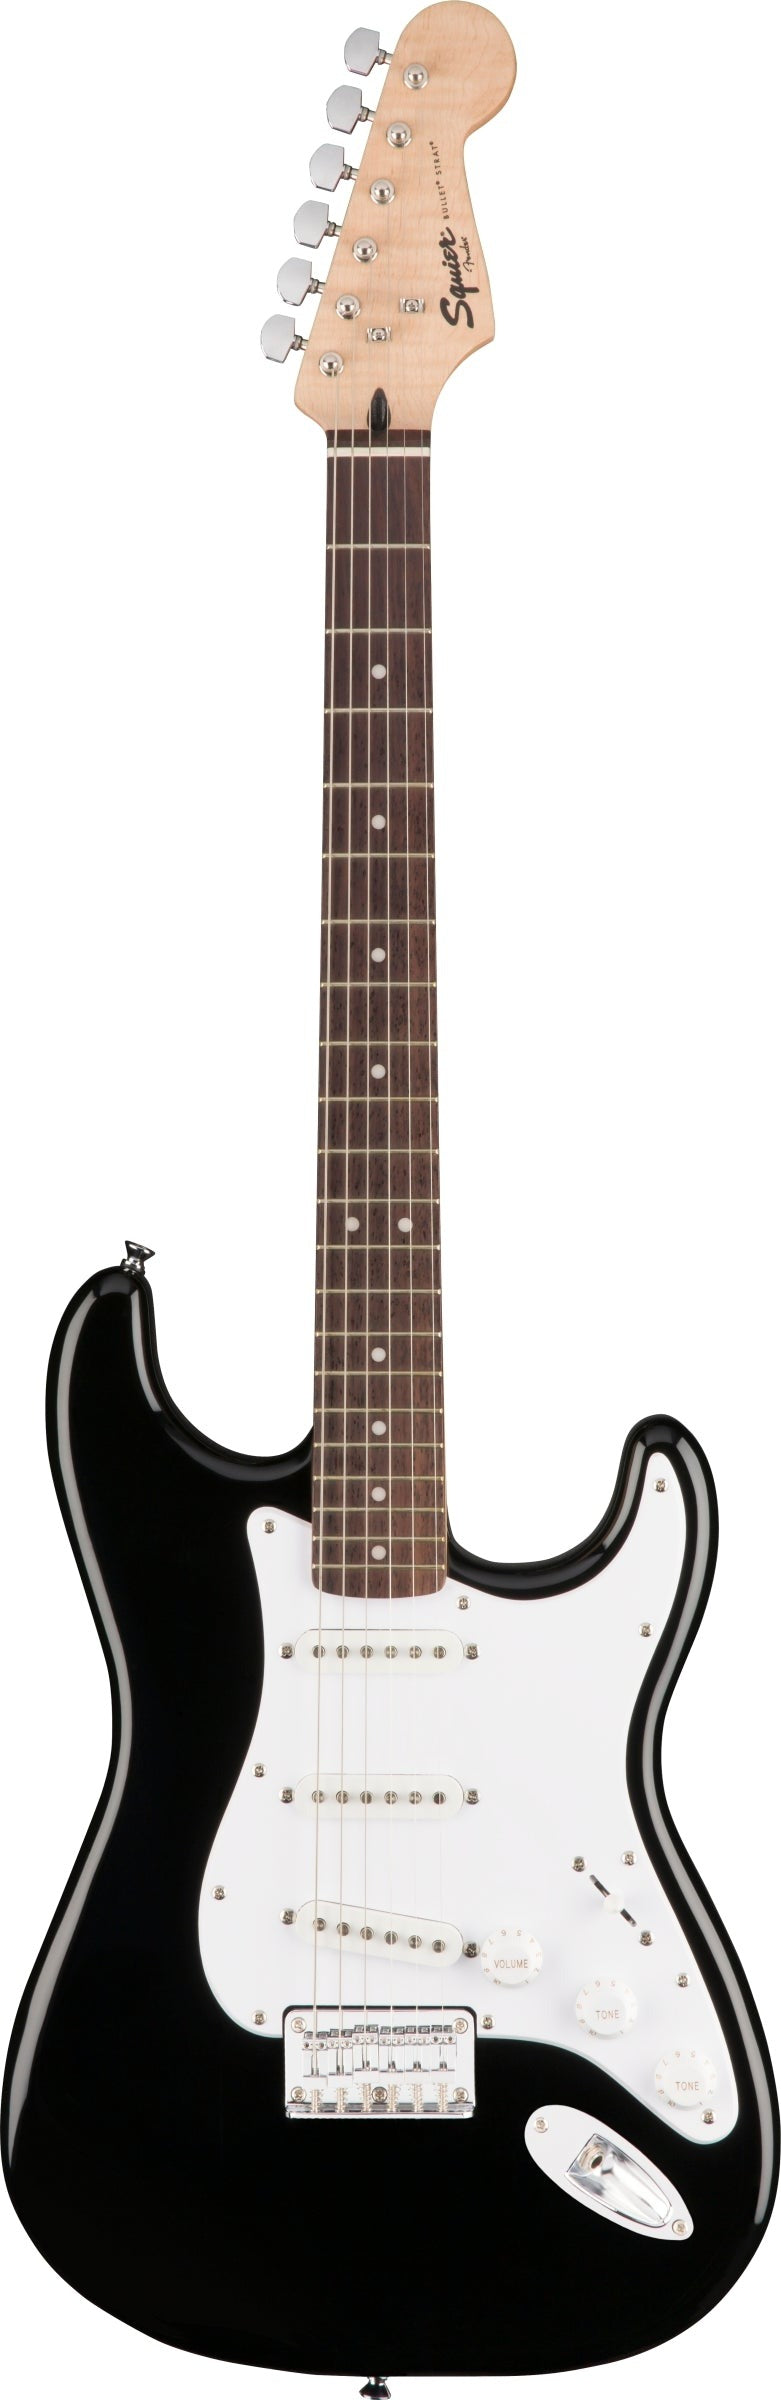 Squier Bullet HT Stratocaster Electric Guitar - Black